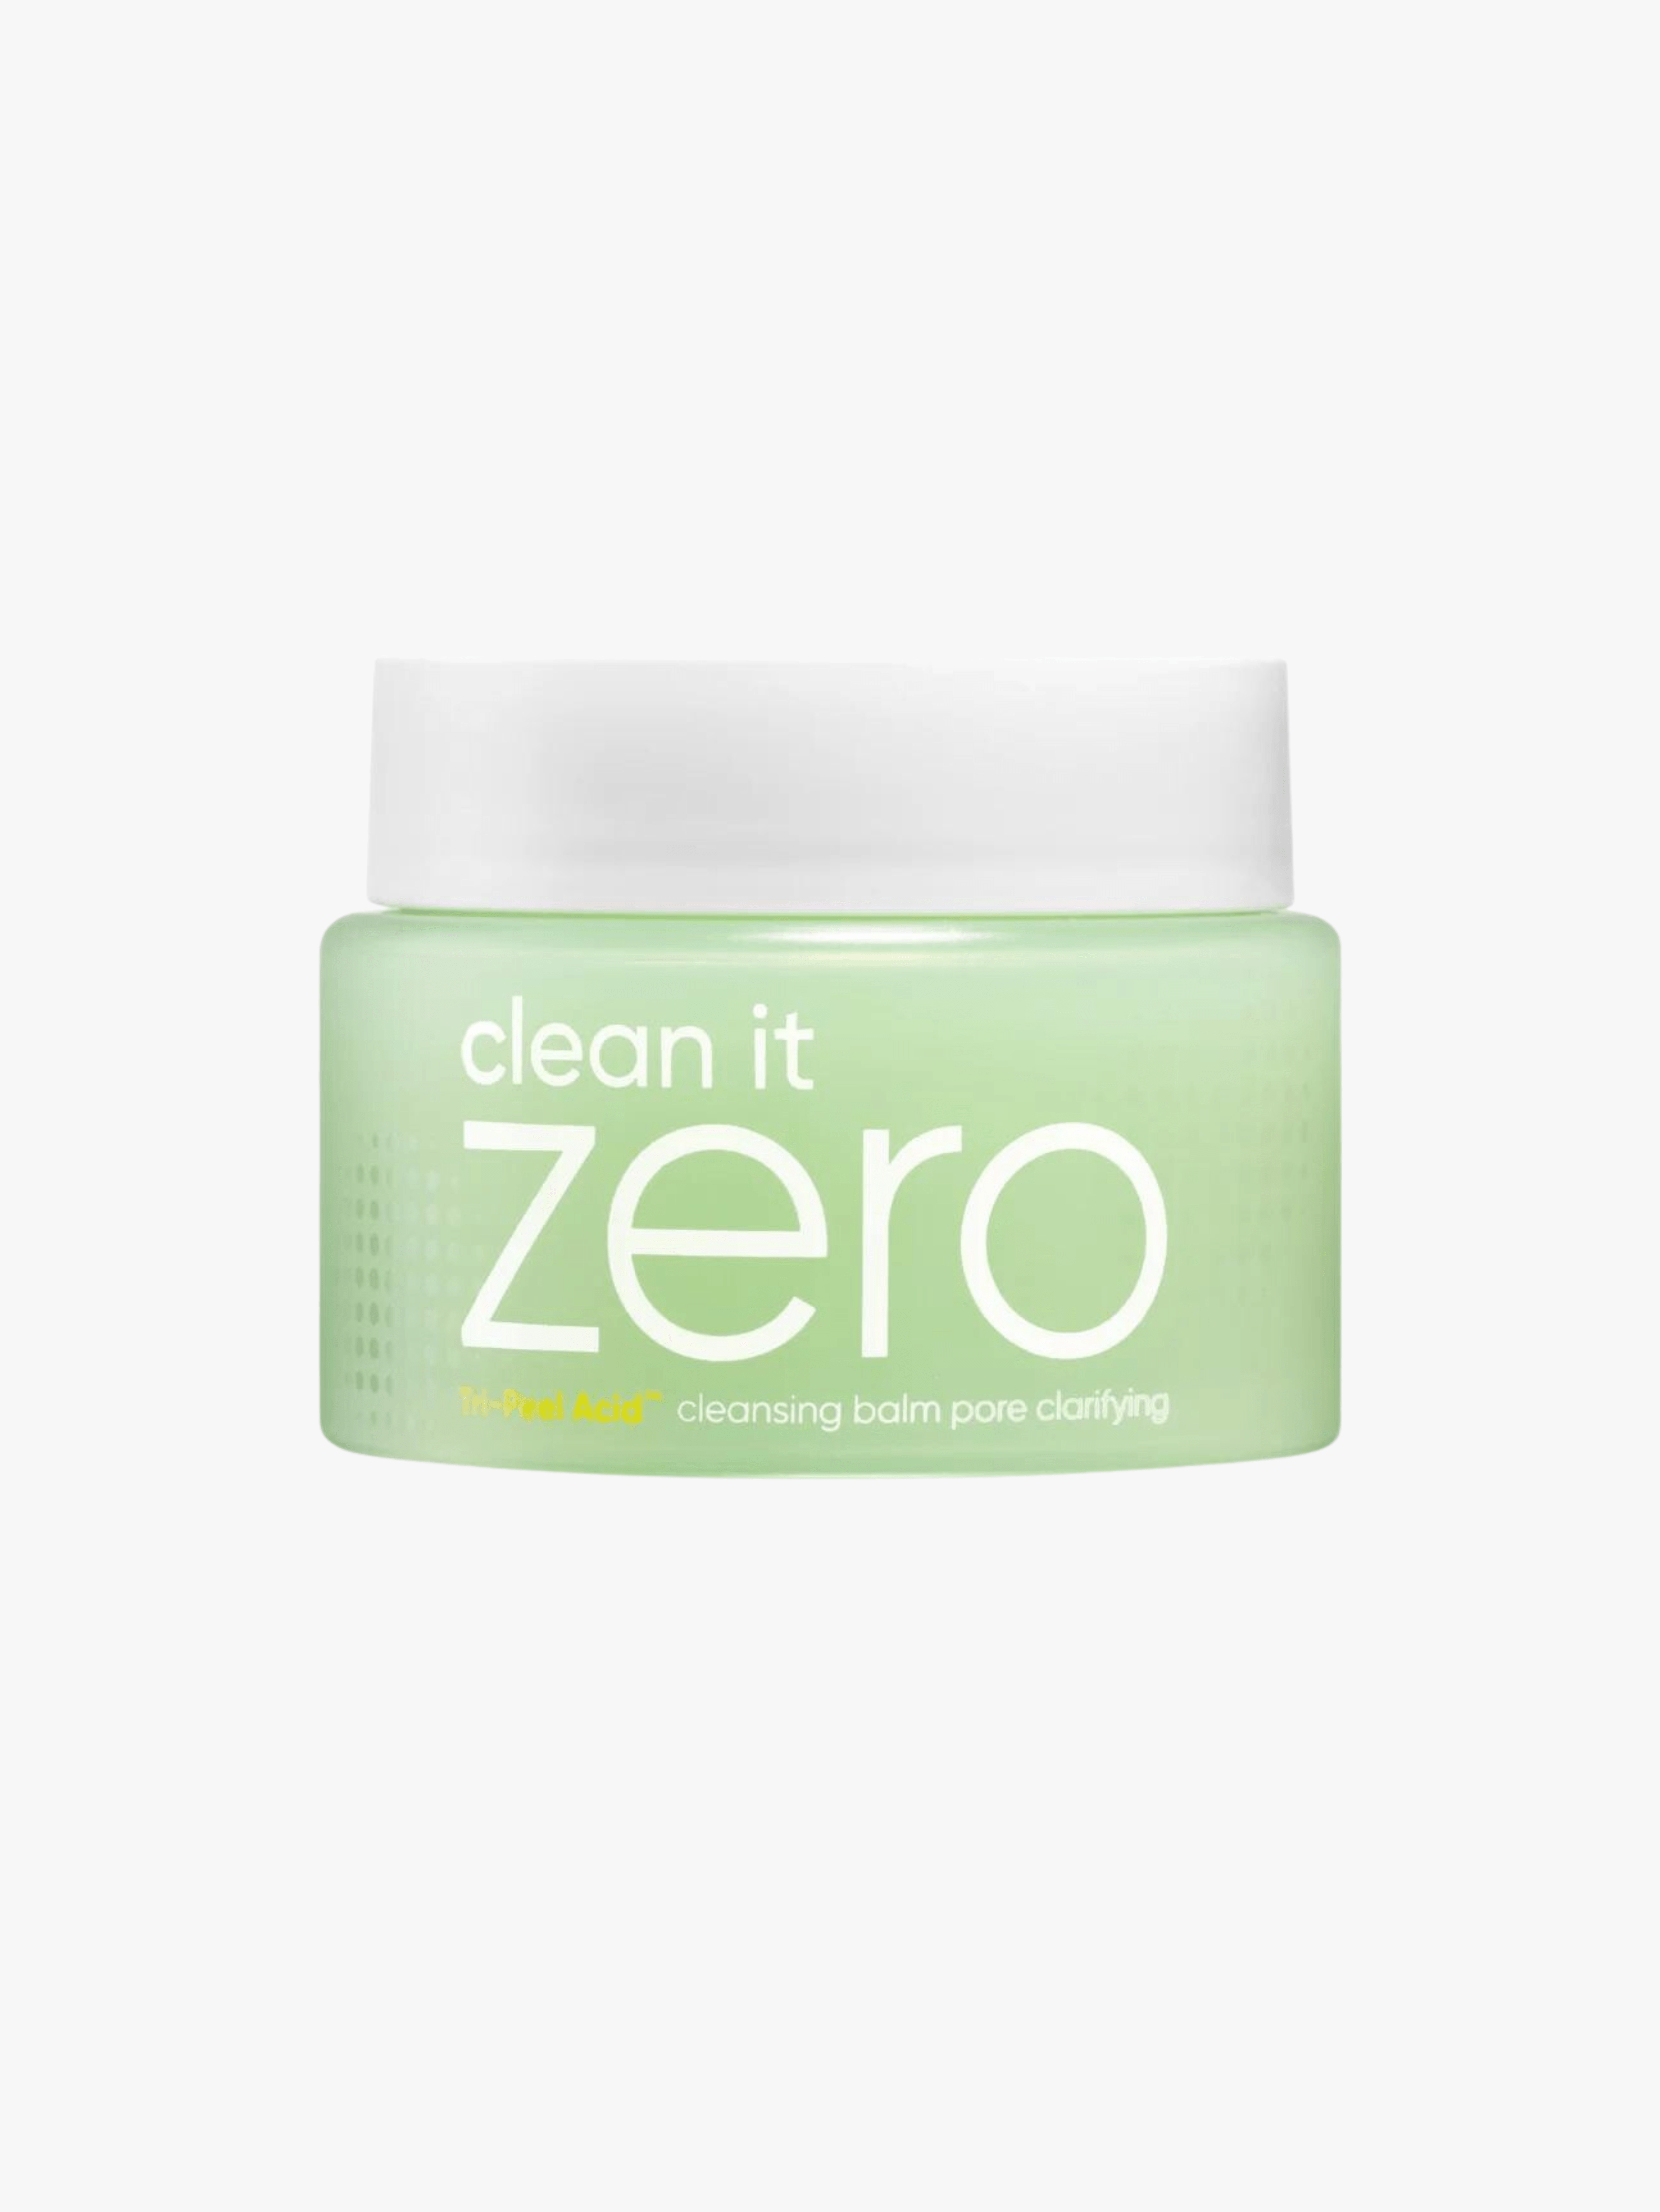 Banila Co - Baume nettoyant - Clean it zero cleansing balm Pore Clarifying